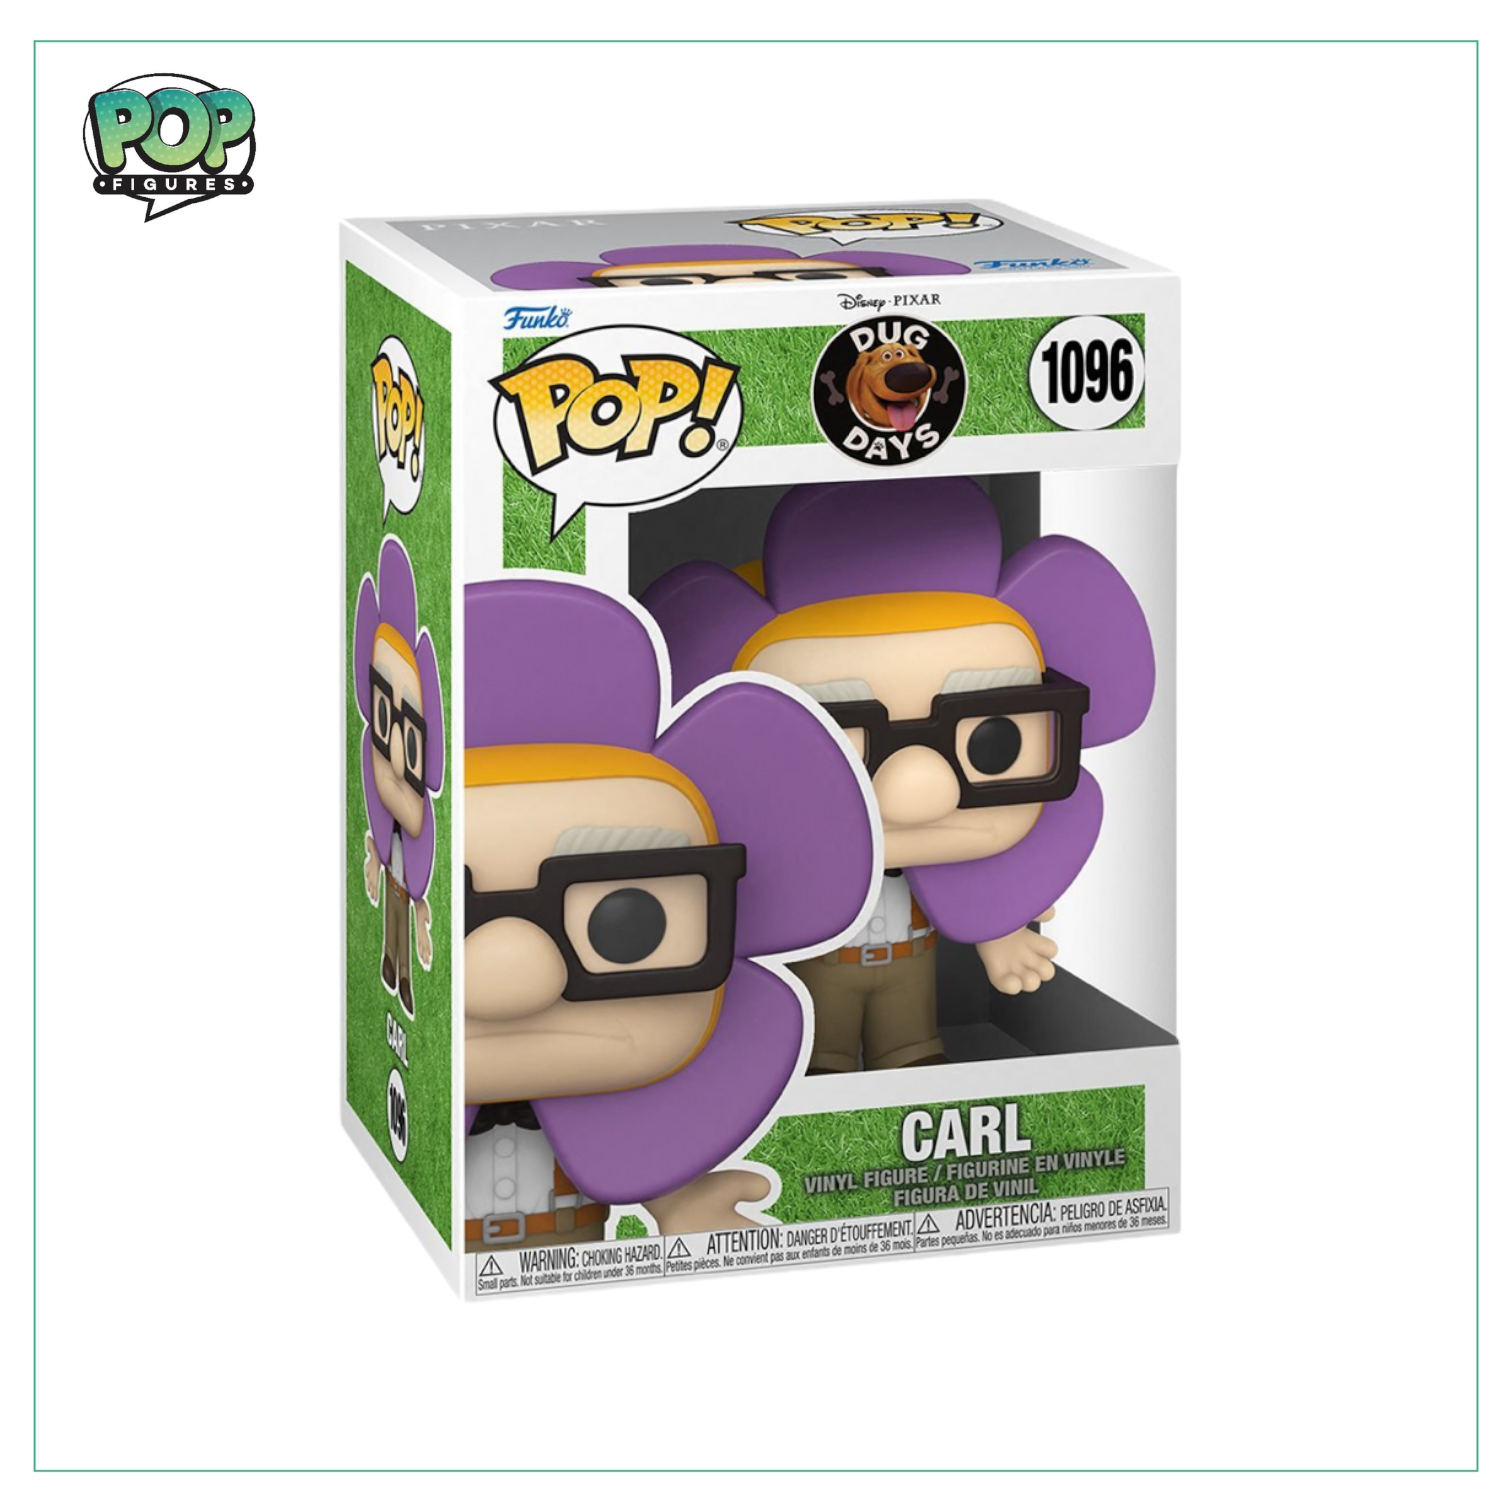 Carl #1096 Funko Pop! Disney Pixar Dug Days